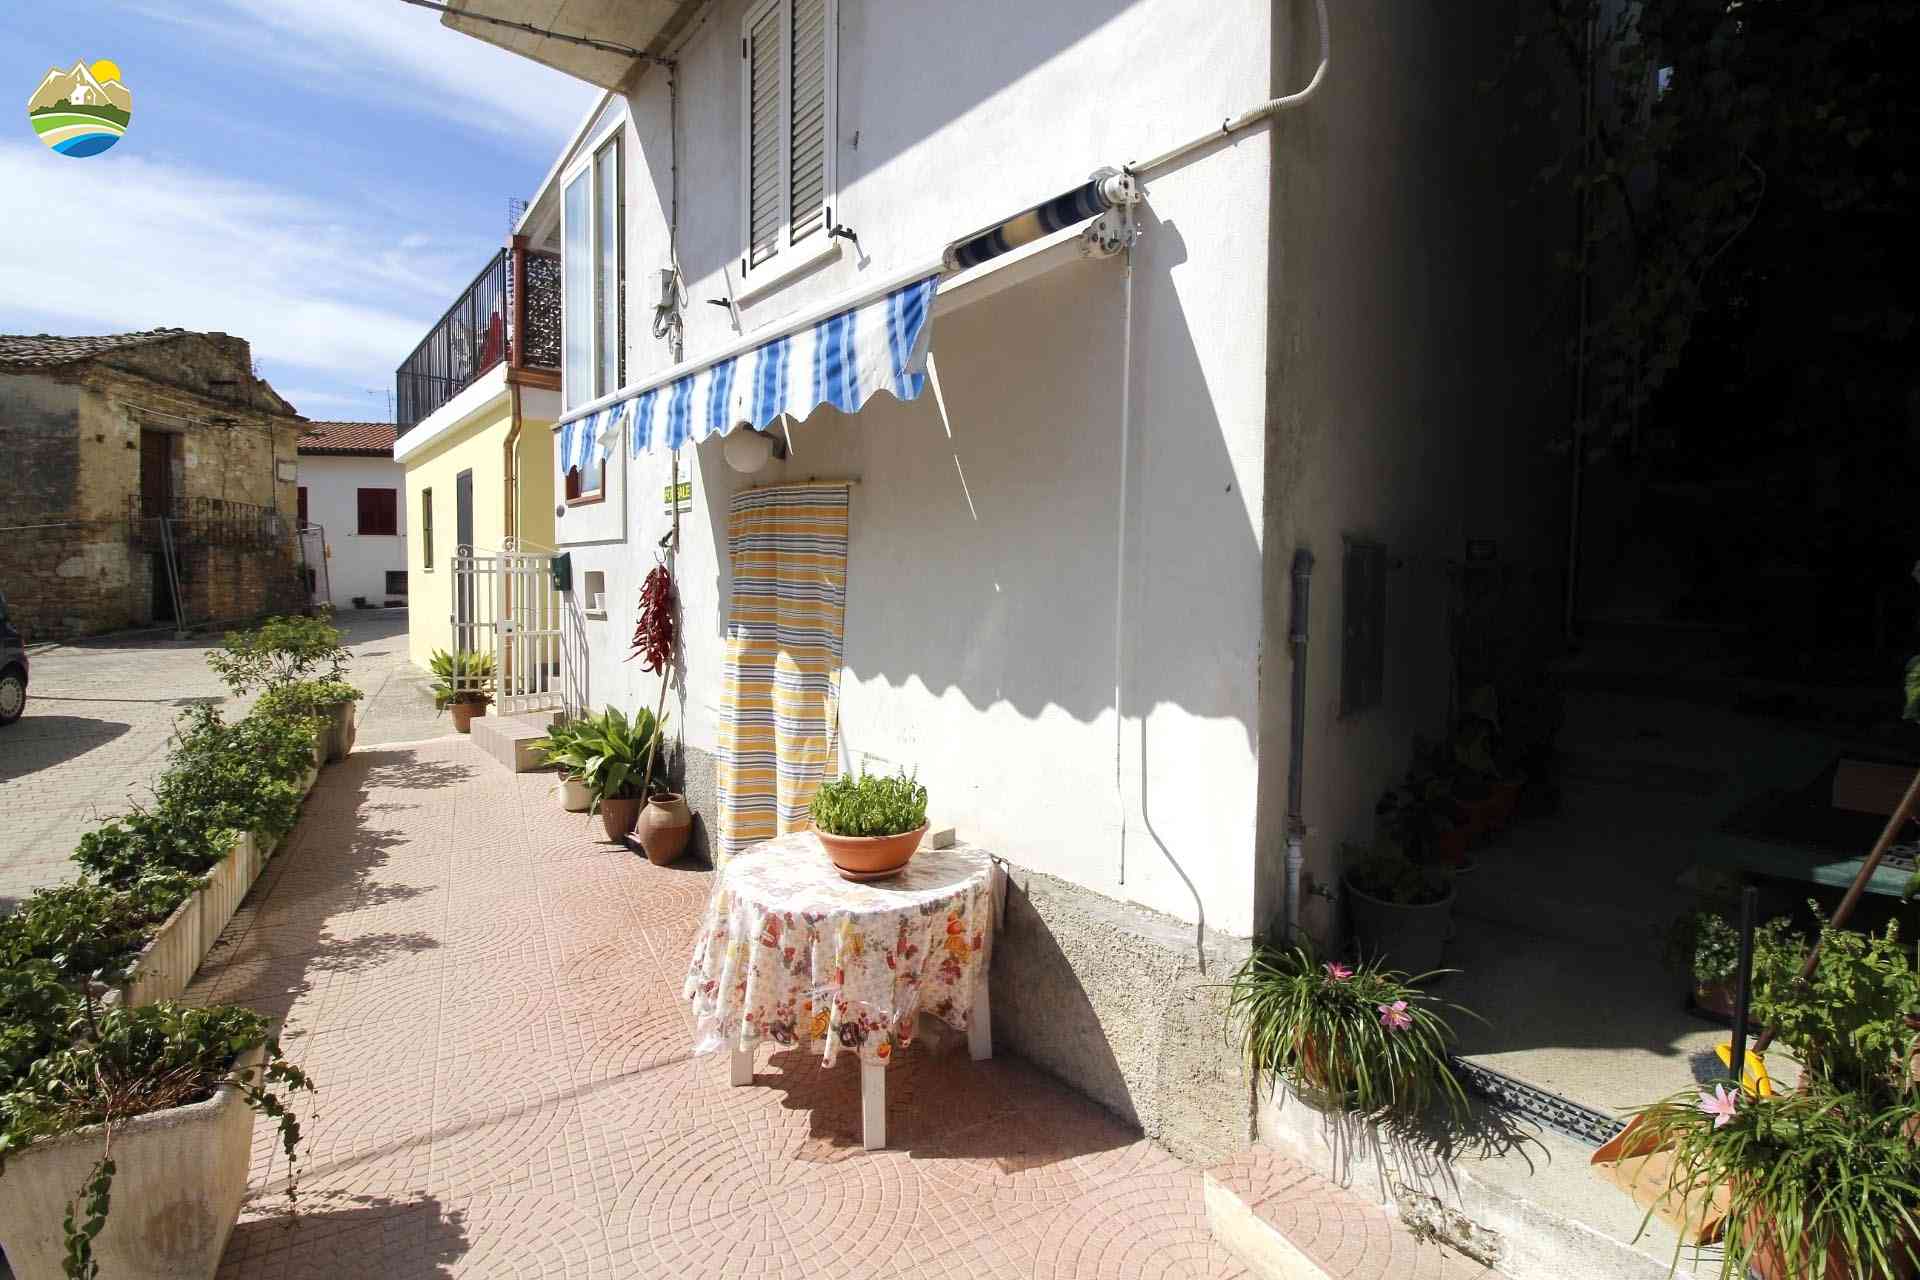 Casa in paese Casa in paese in vendita Montefino (TE), Casa Peperone - Montefino - EUR 58.435 540